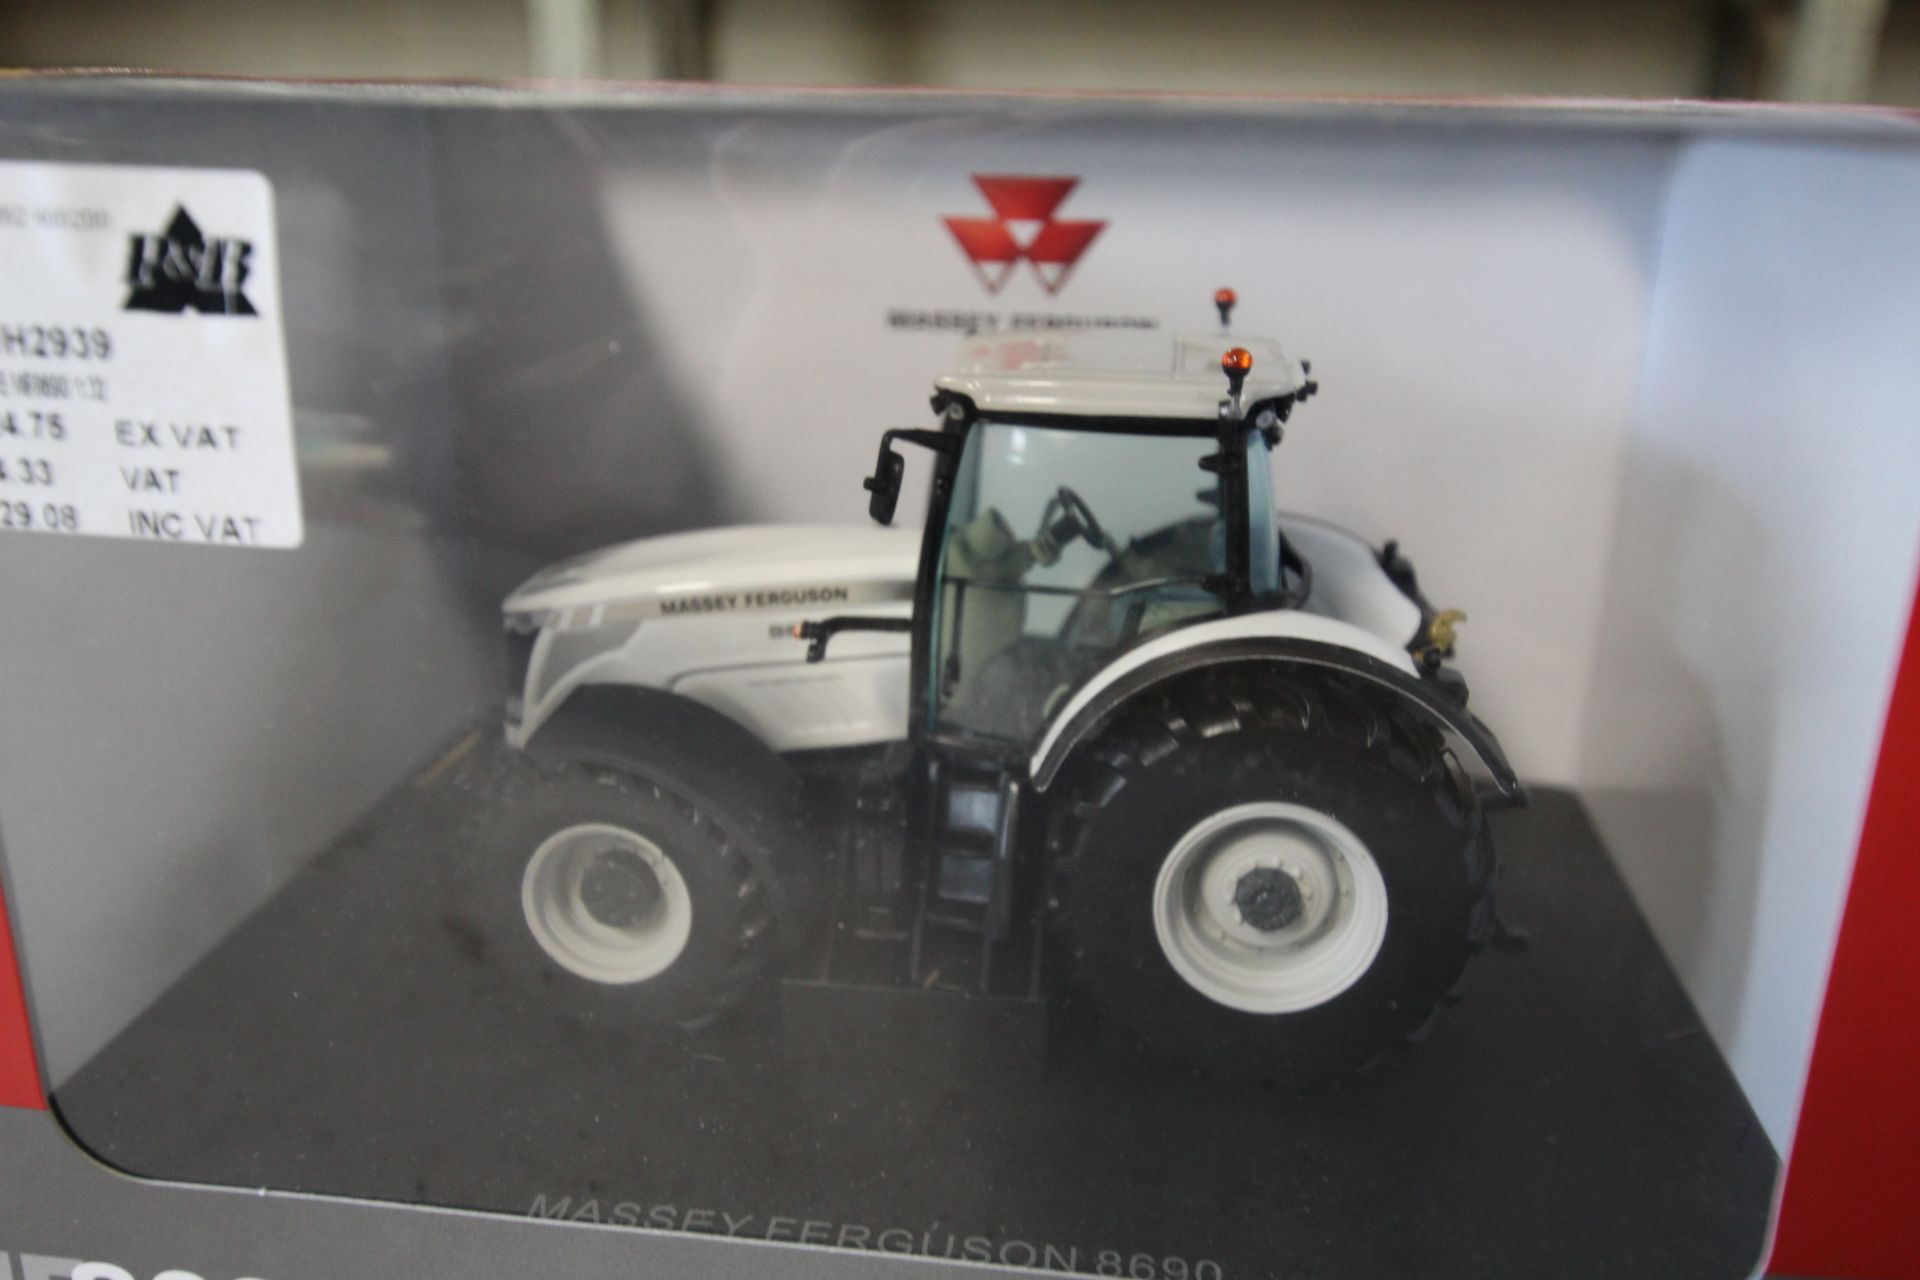 UH Massey Ferguson 8690 Tractor White Limited Edition 1/32 scale. - Bild 2 aus 2